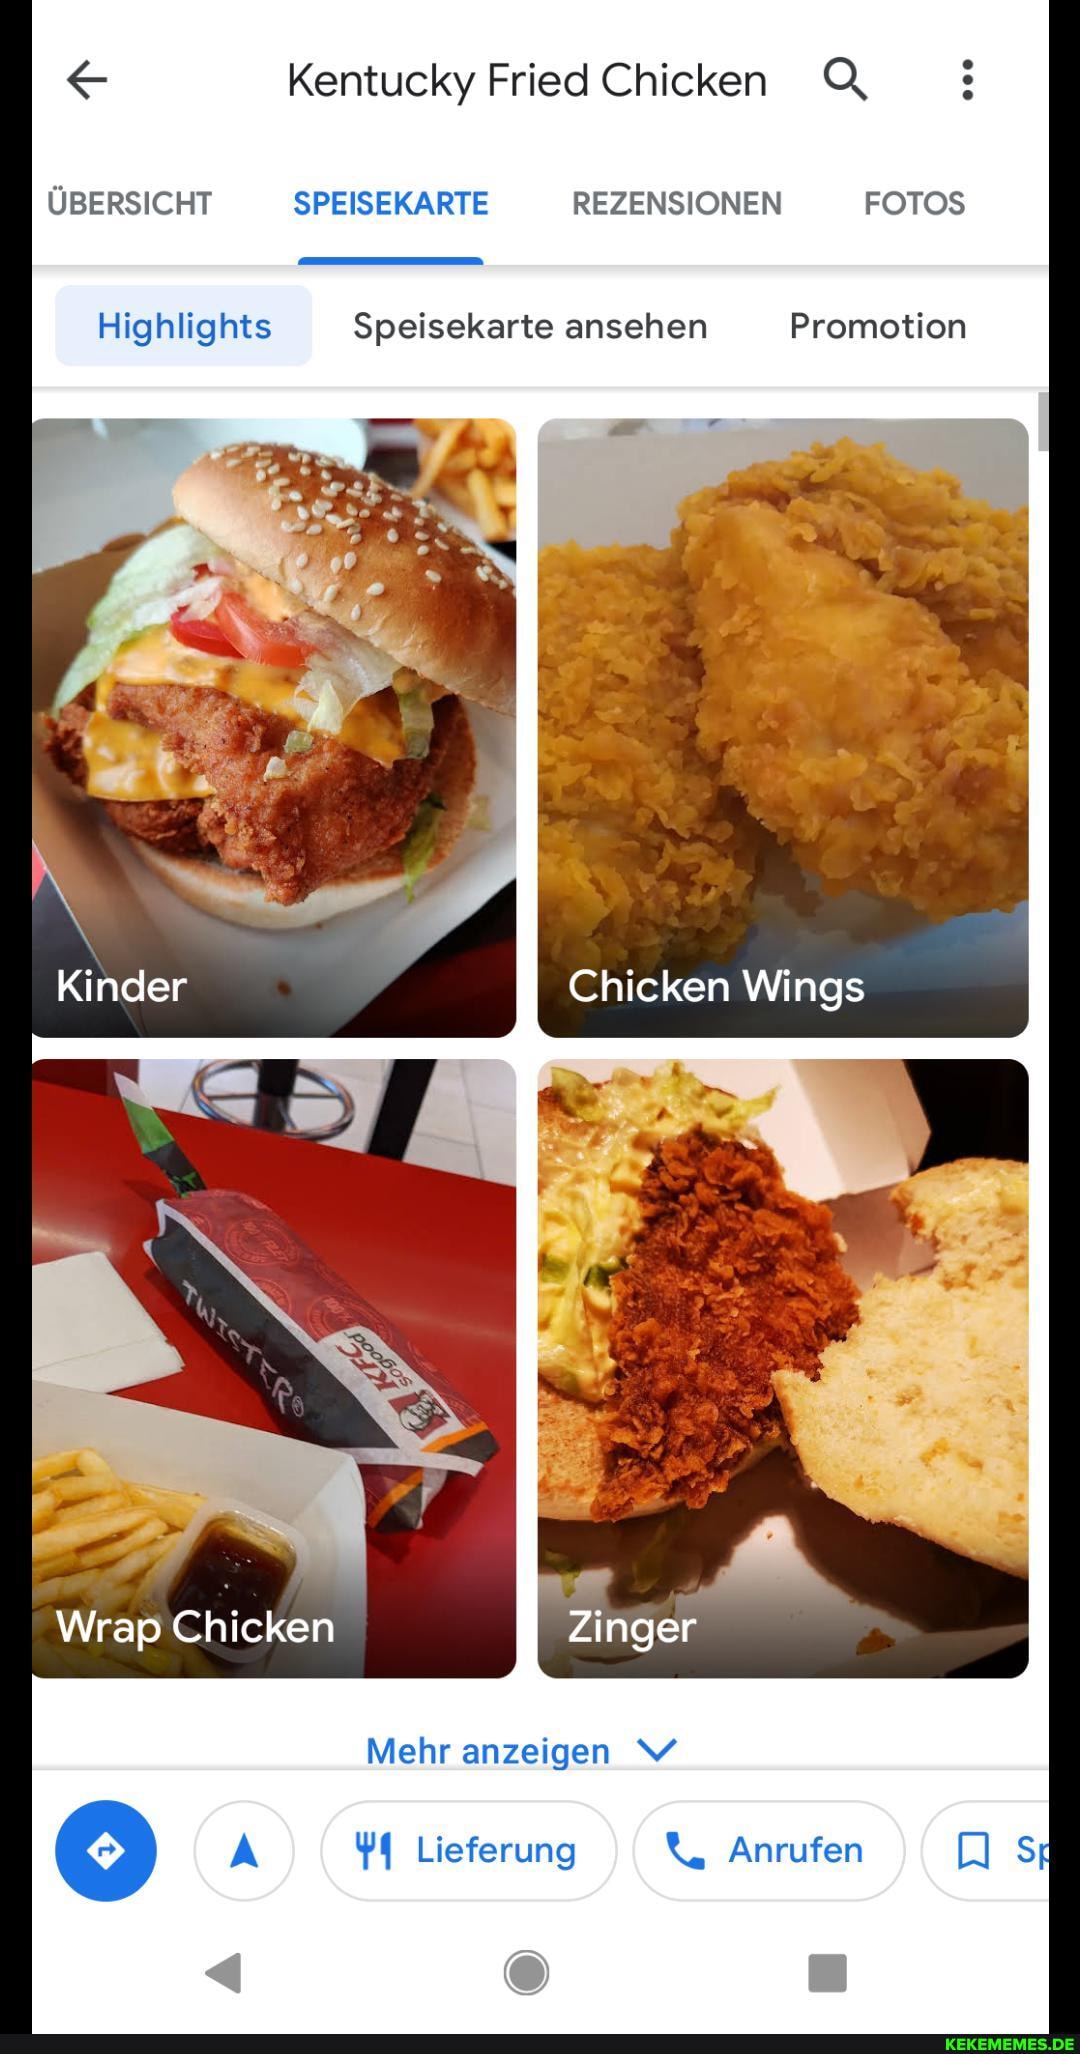 Kentucky Fried Chicken Q: UBERSICHT SPEISEKARTE REZENSIONEN FOTOS Highlights Spe